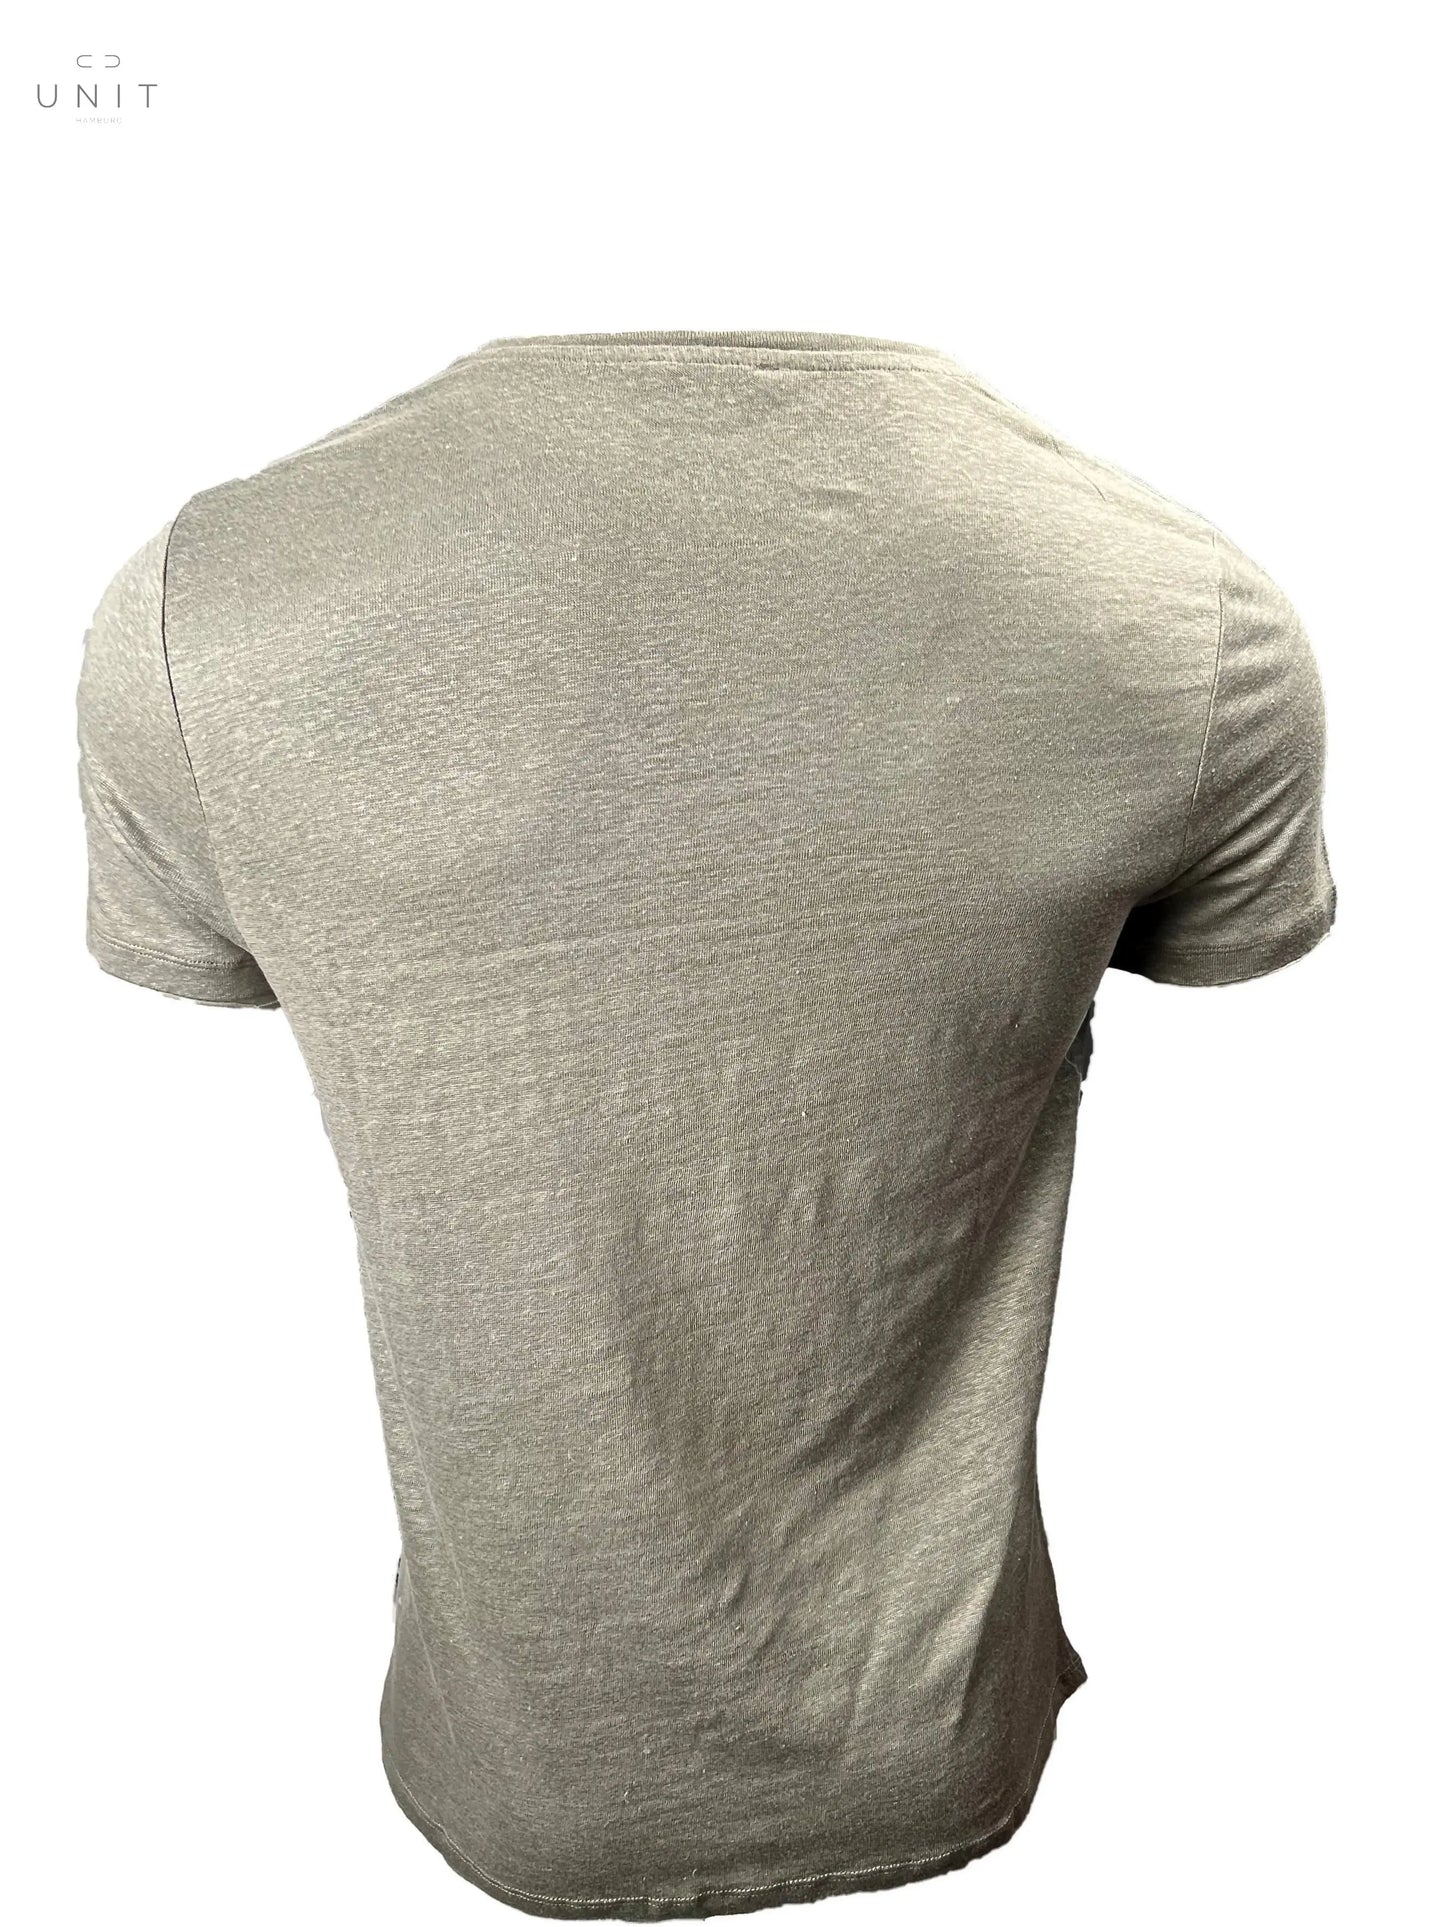 Rücken von Kiefermann 432-21085 Flynn  Leinen T-Shirt V-Neck khaki oliv